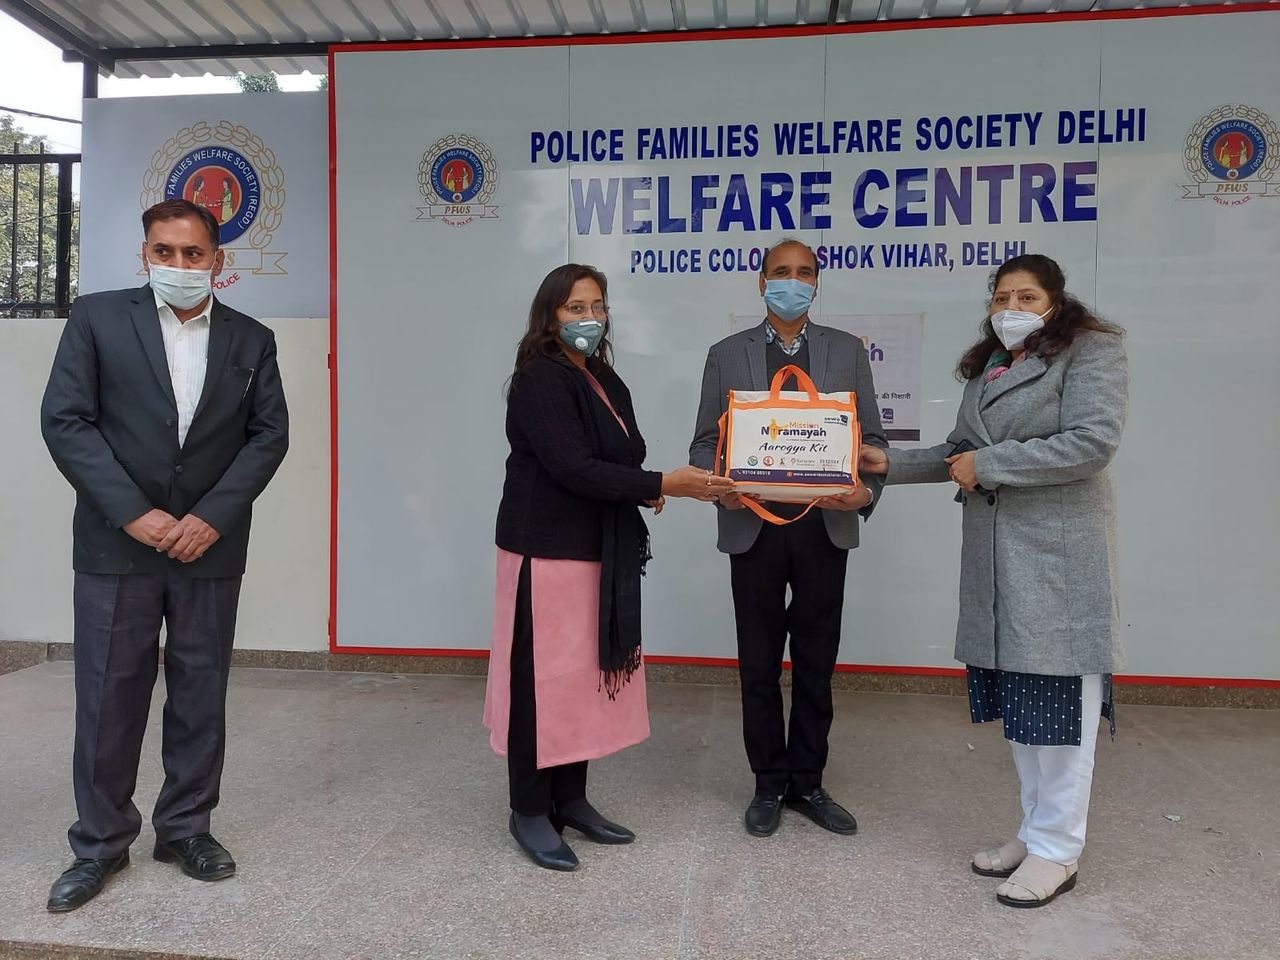 Sewa Bharti and Police Families Welfare Society Delhi Ashok Vihar come together for Mission Chetna